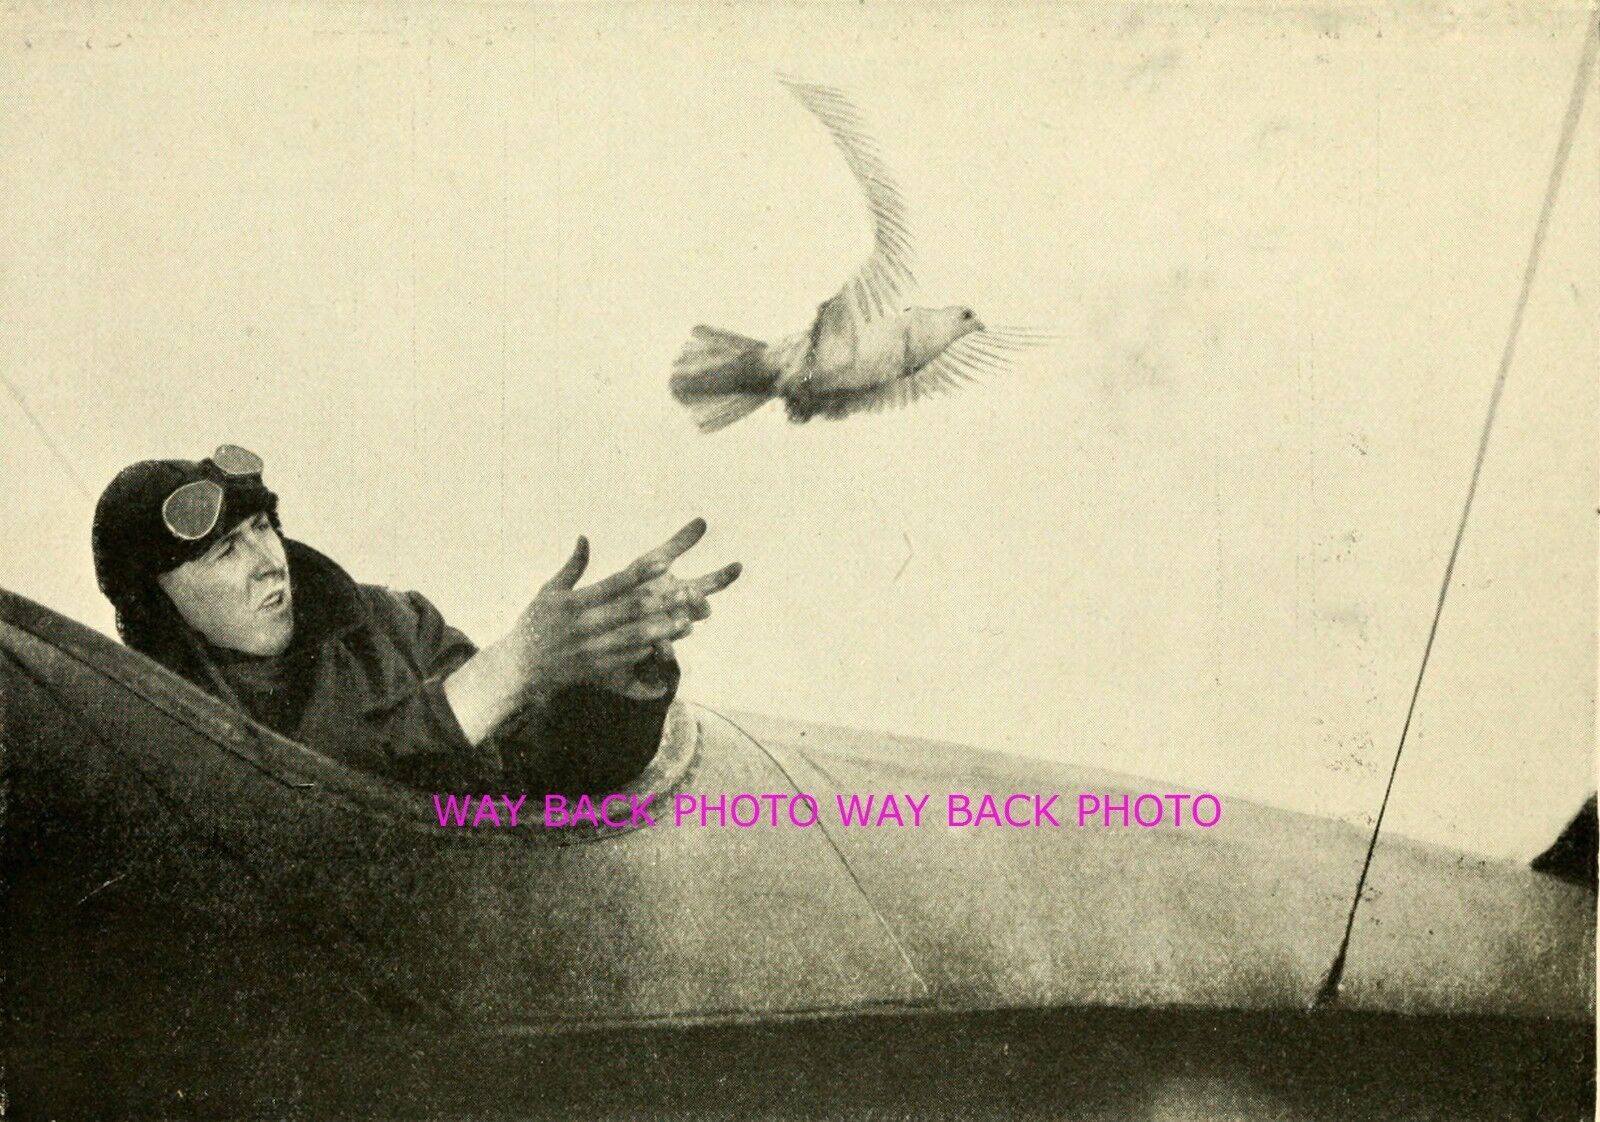 WWI IMAGE OF PILOT RELEASING HOMING PIGEON BEHIND GERMAN LINES - REPRINT